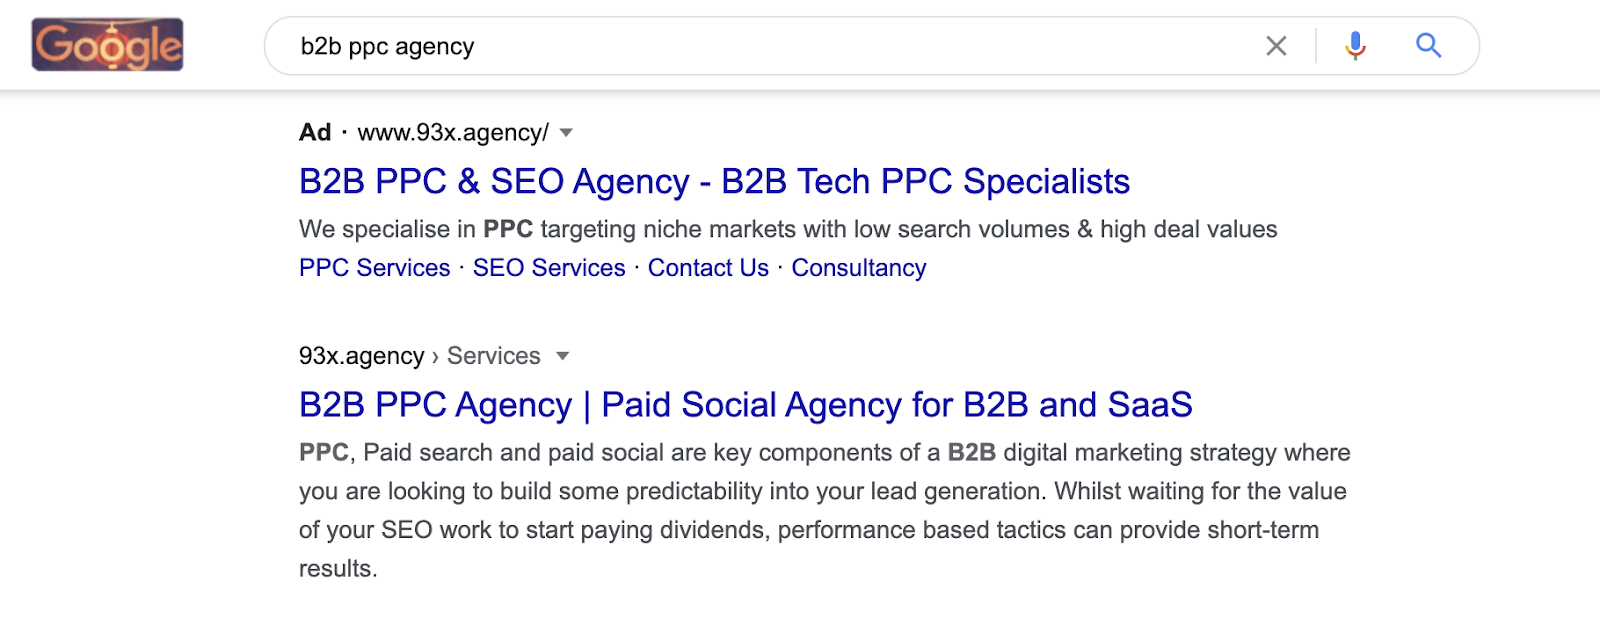 b2b ppc agency screenshor